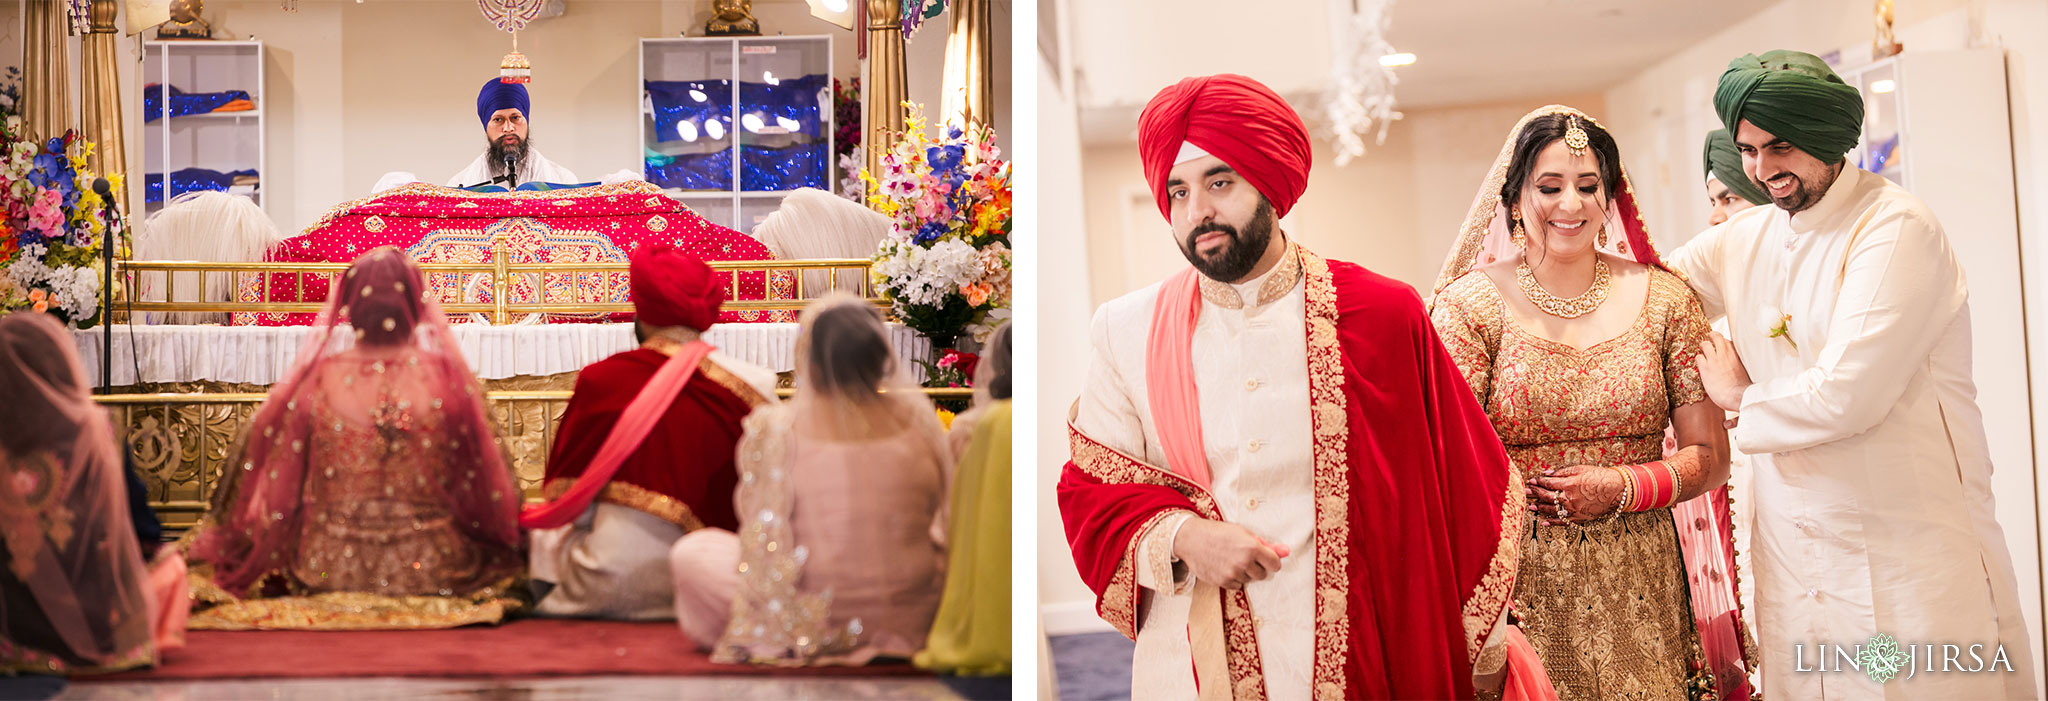 030 san francisco sikh center punjabi wedding photography